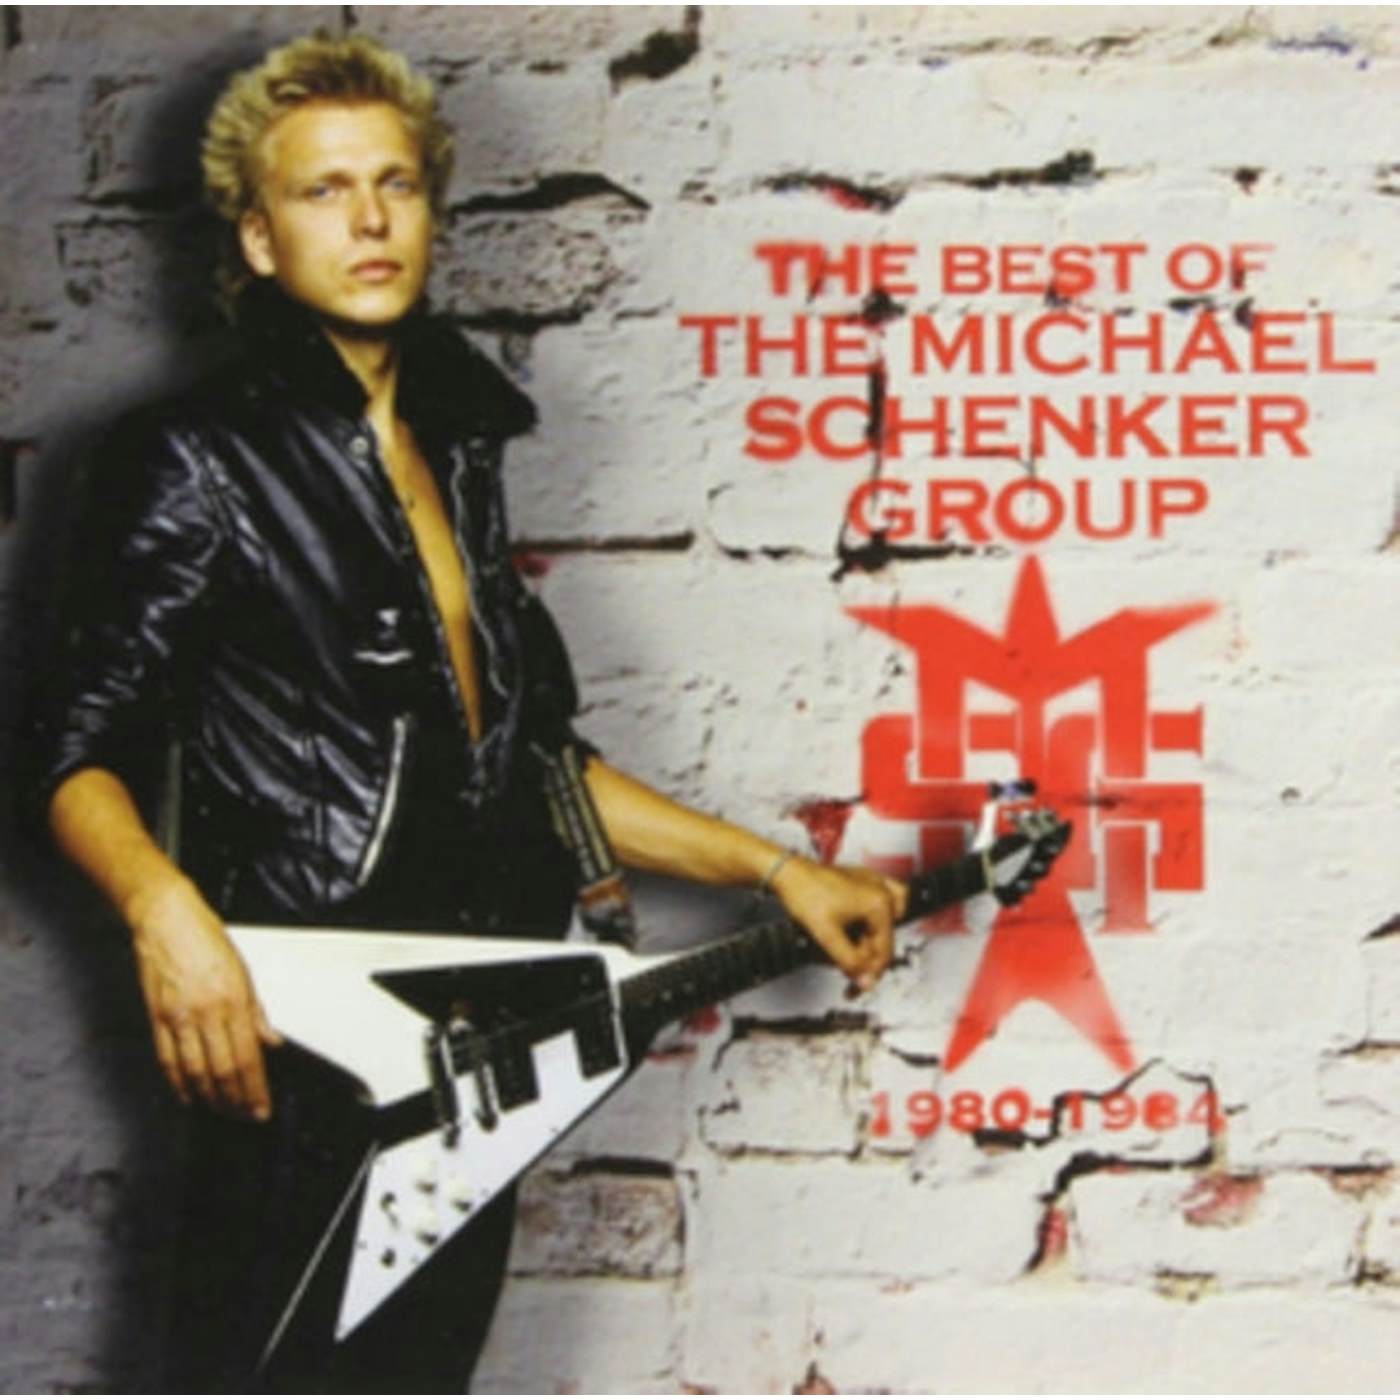 Michael Schenker Group CD - The Best Of - 19 80-19 84